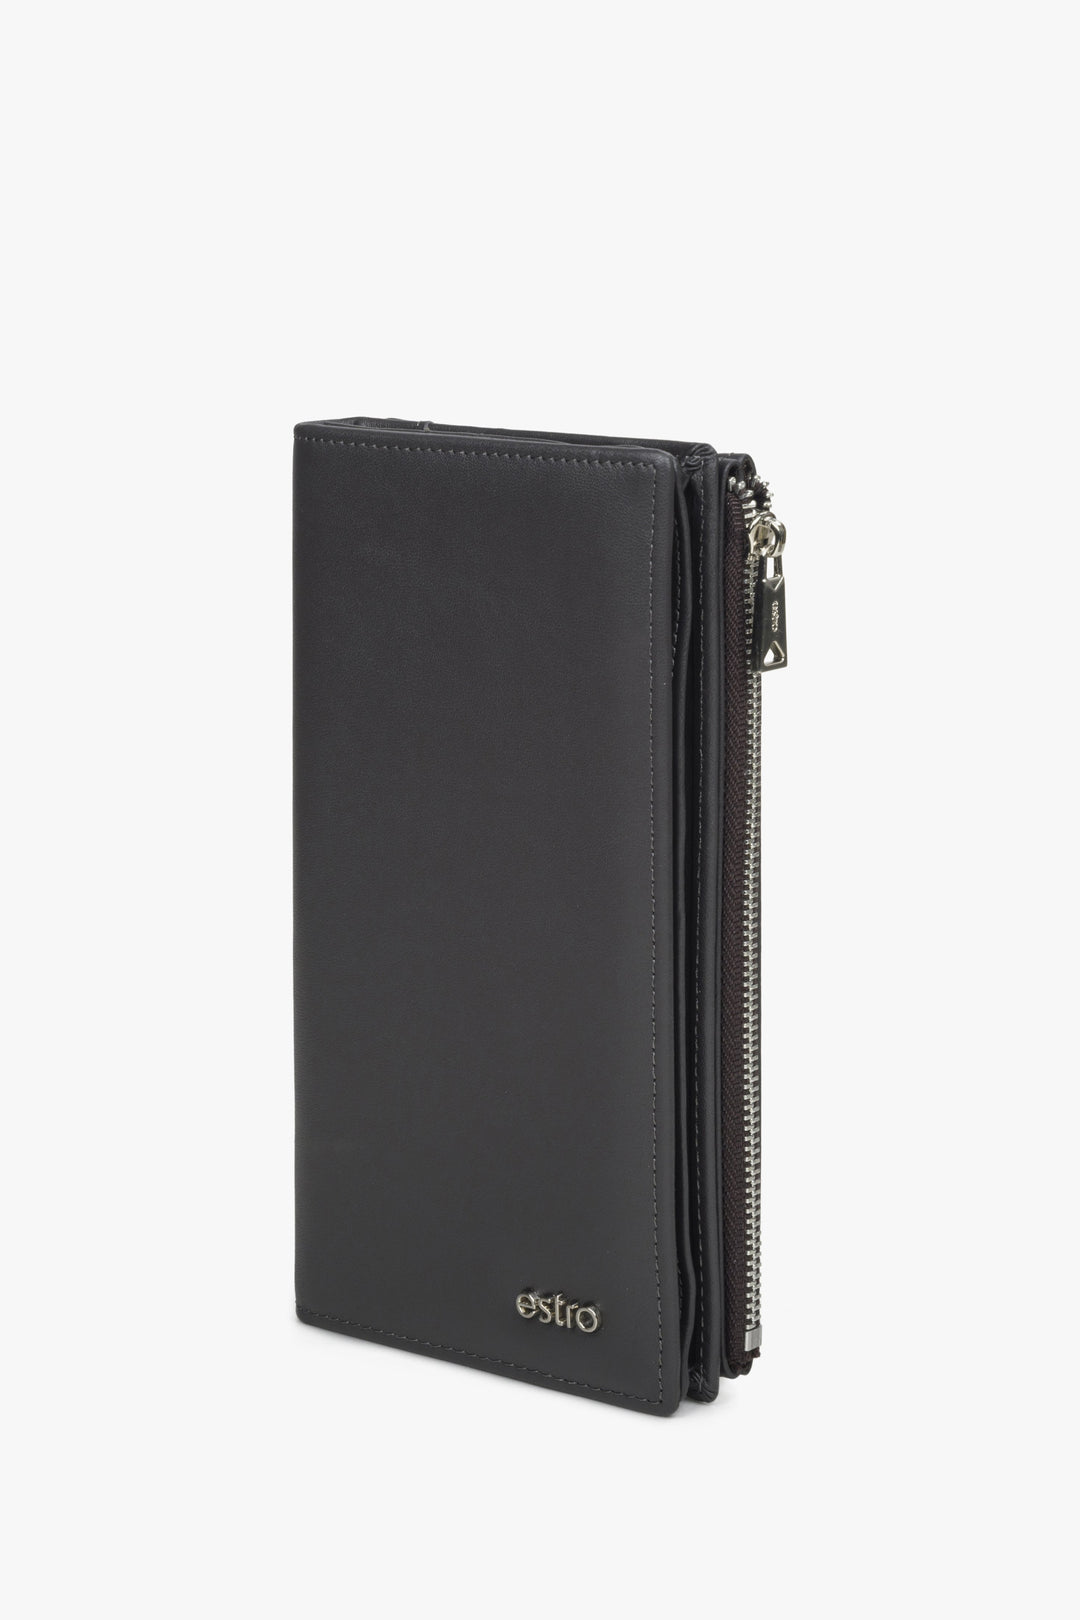 Large men's  black Estro wallet.